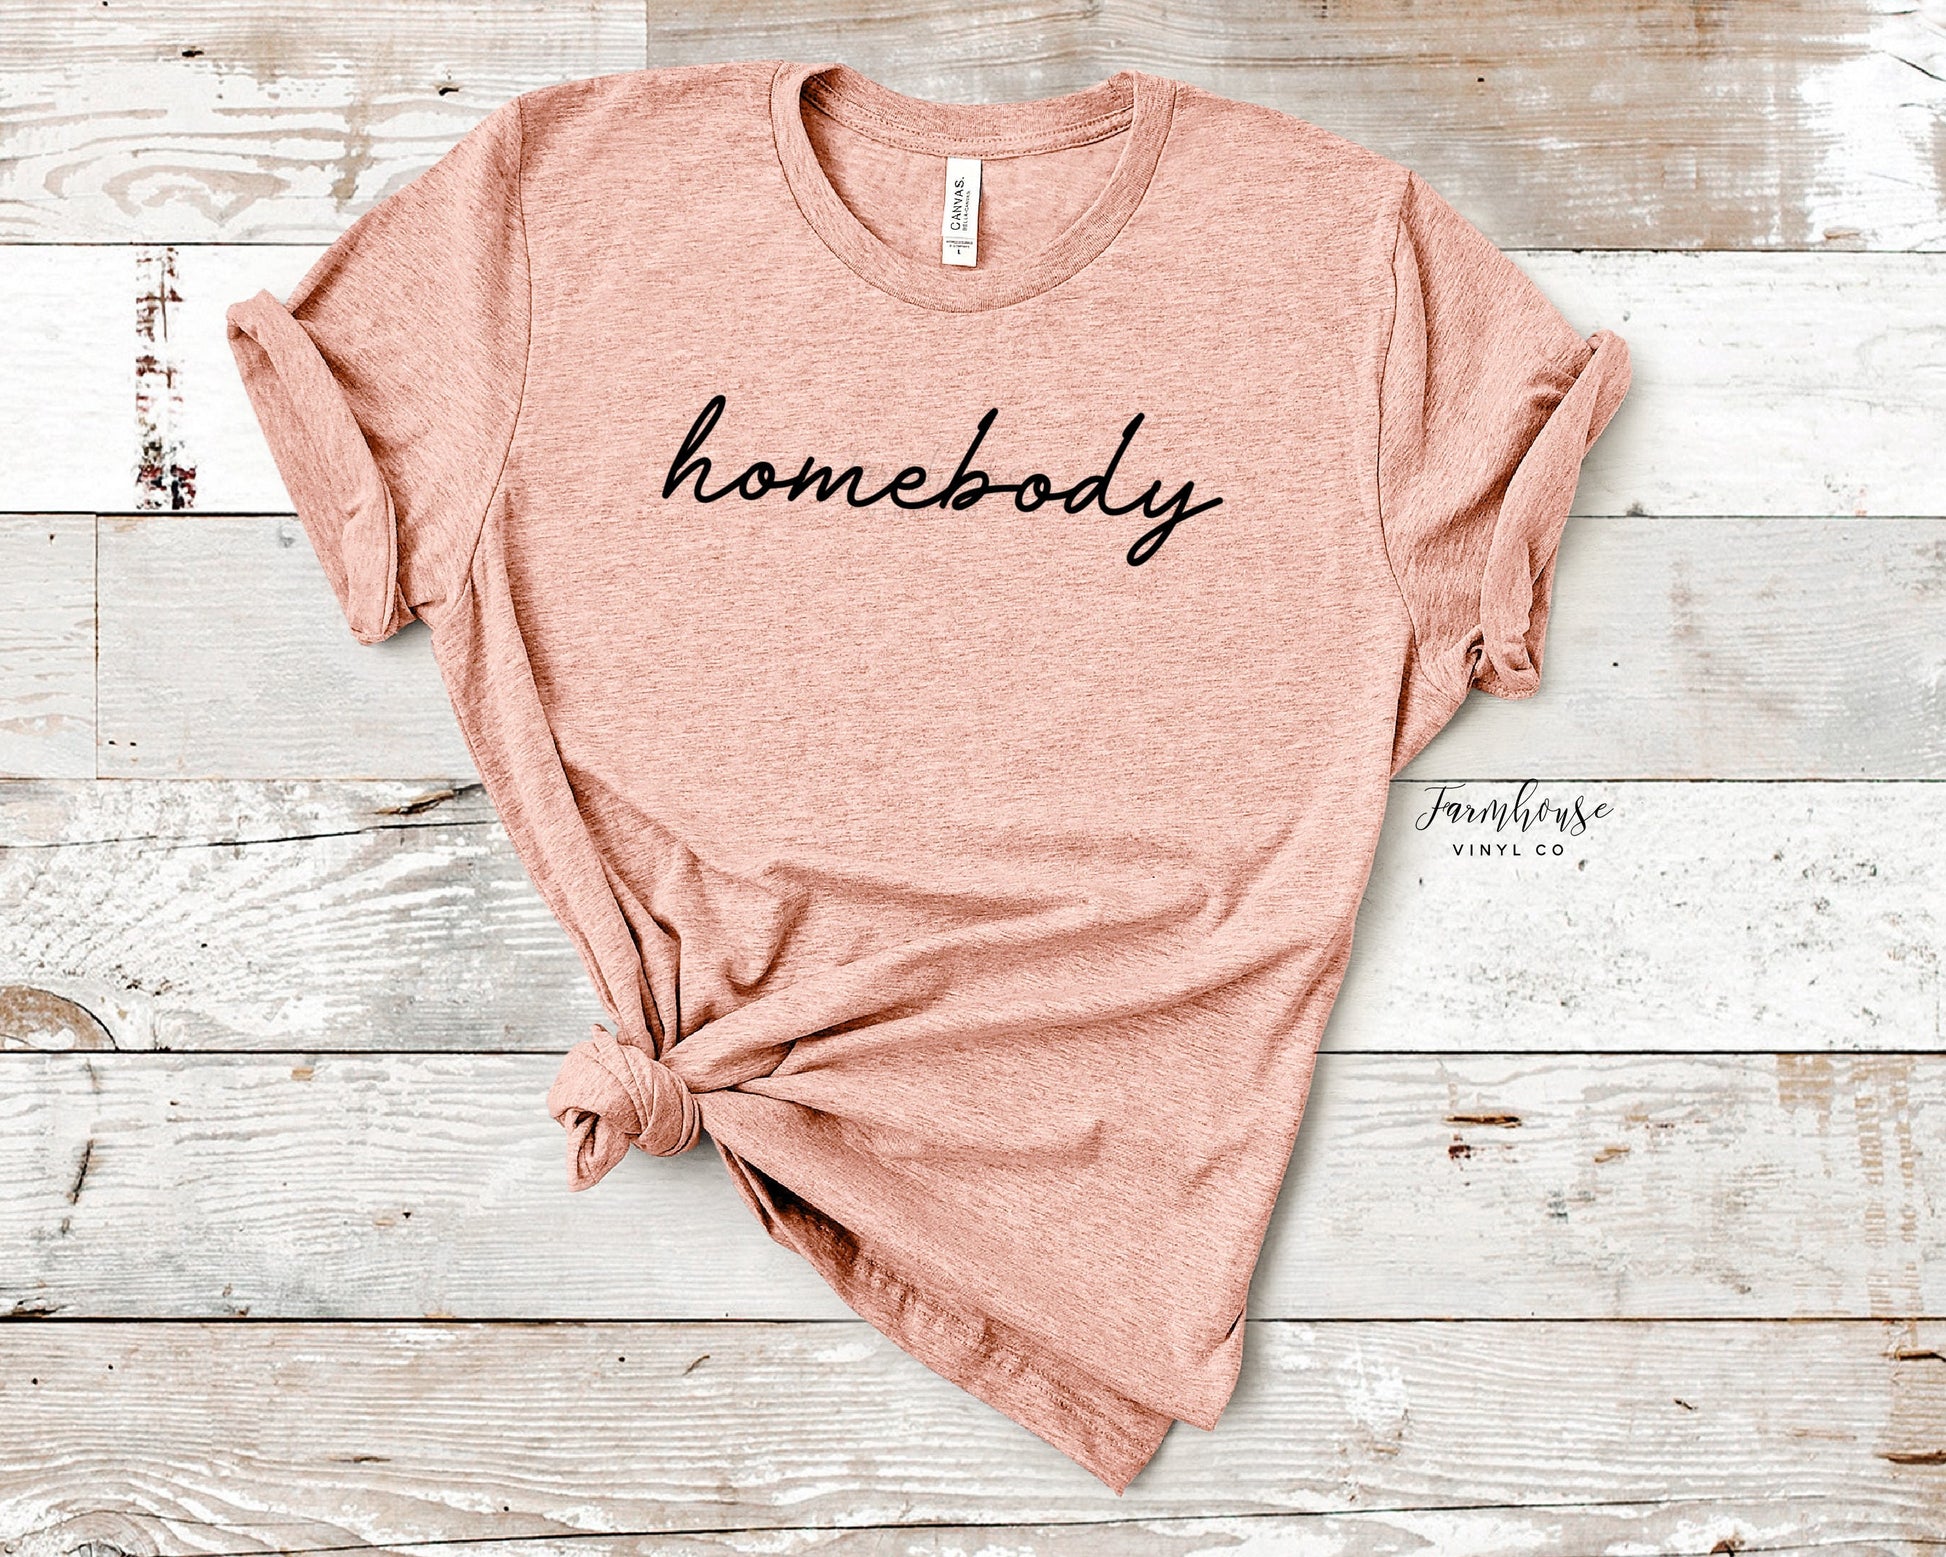 Homebody Tee Shirt - Farmhouse Vinyl Co